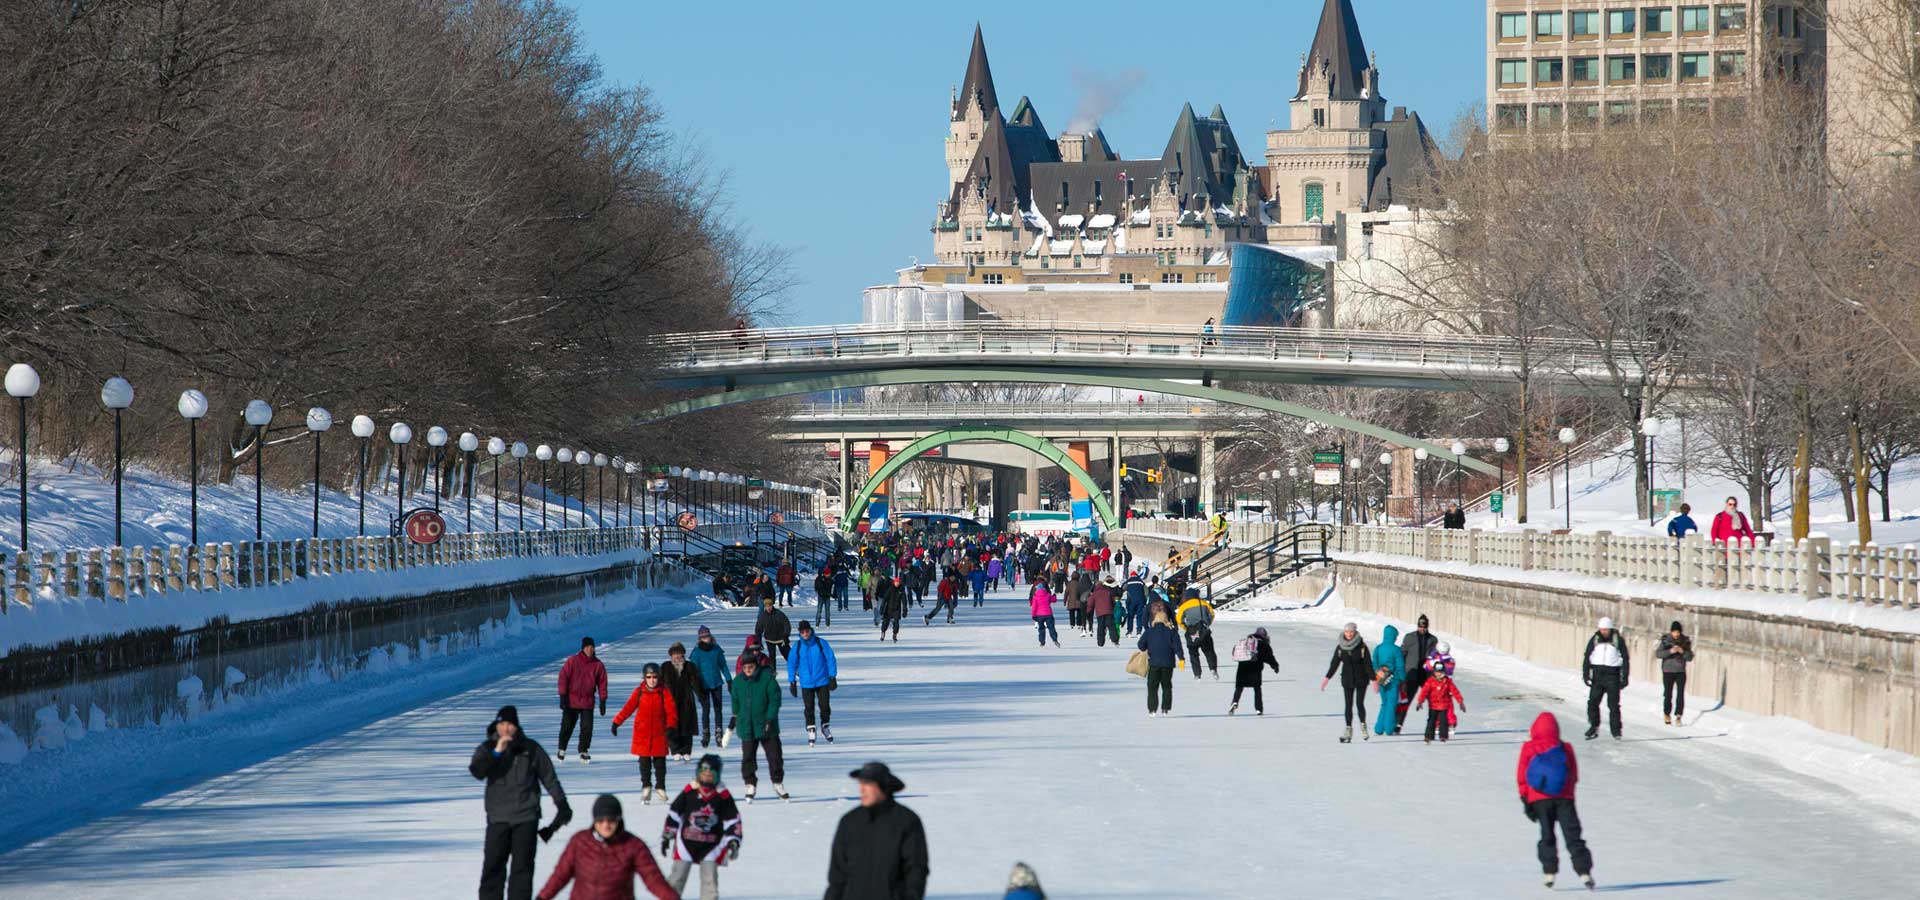 #Canada - An Overview And #Travel #FrizeMedia #DigitalMarketing - Ottawa